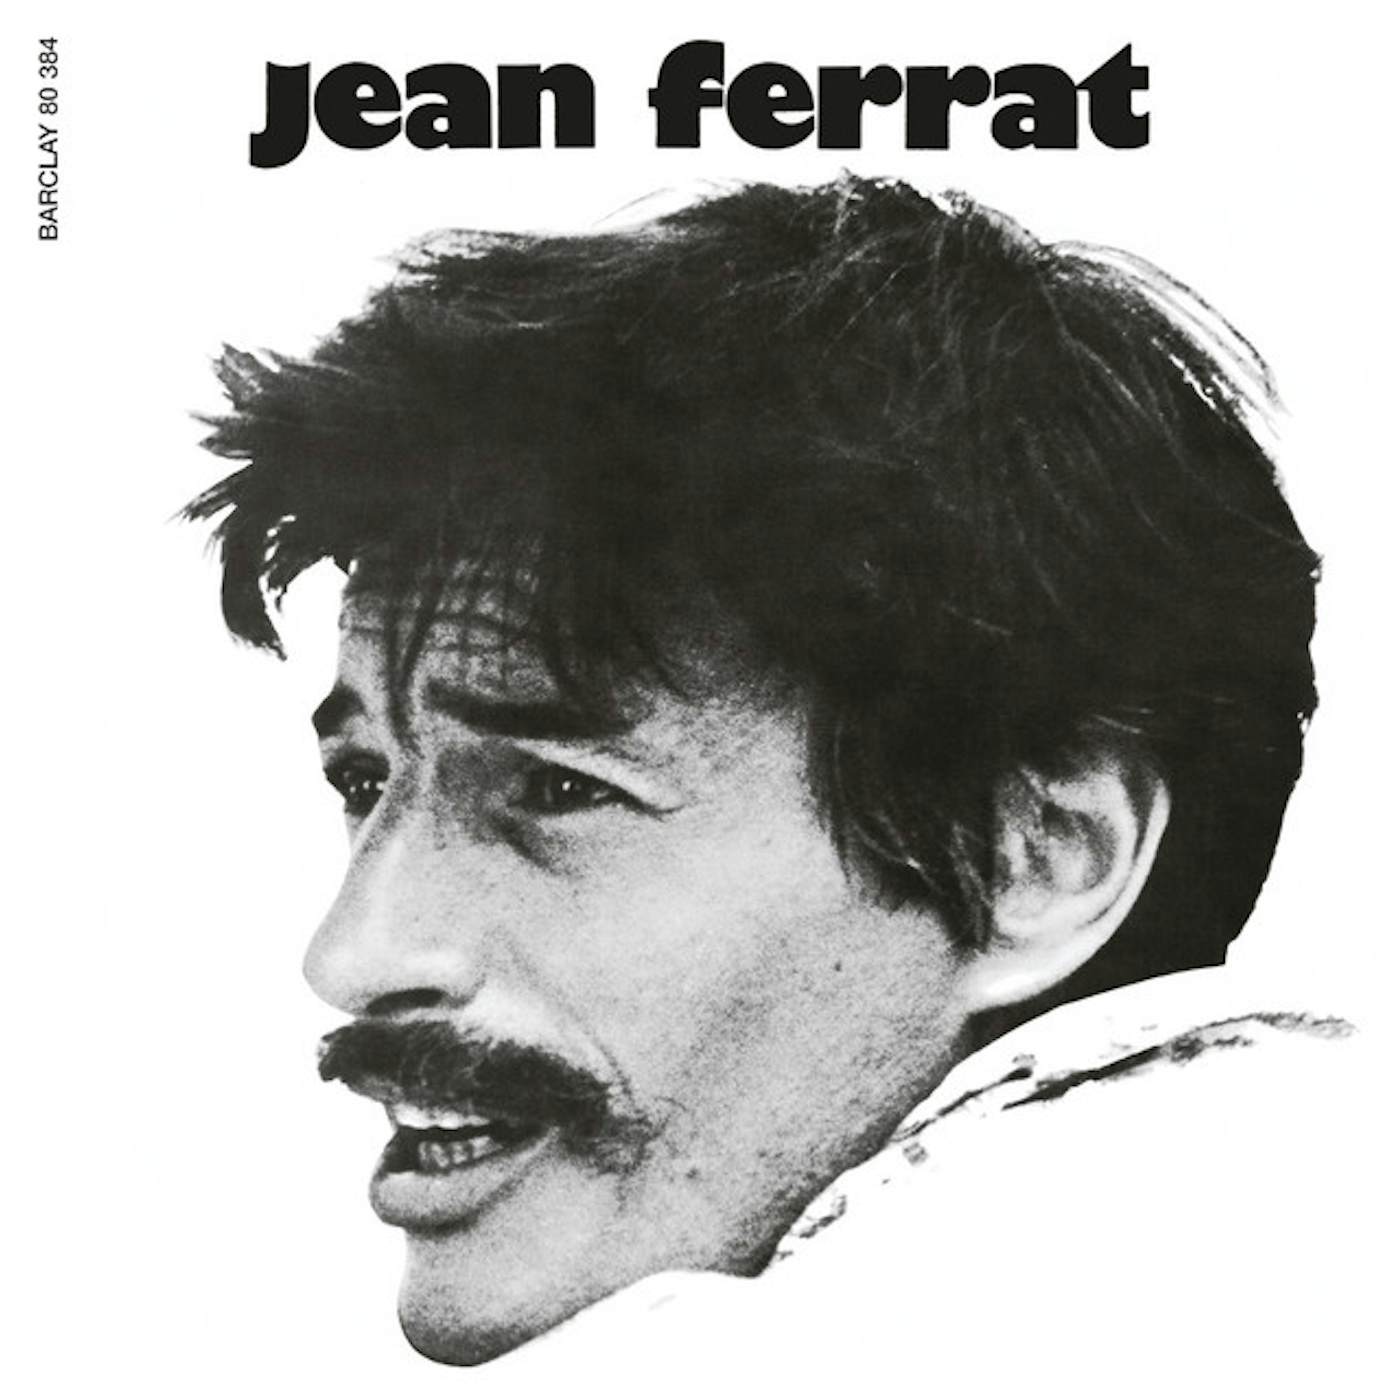 Jean Ferrat MA FRANCE CD